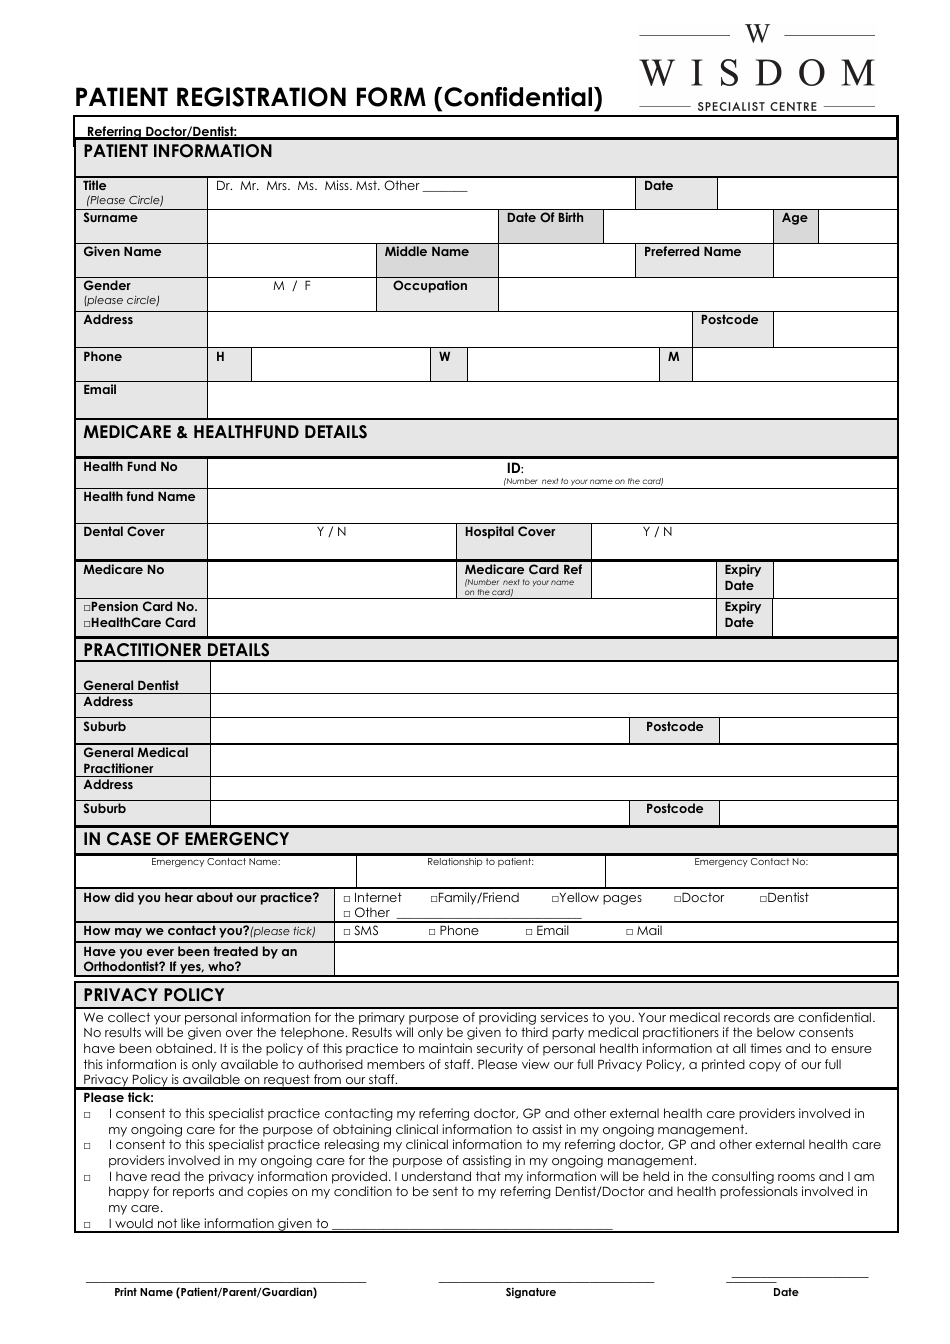 Patient Registration Form - Wisdom Specialist Care, Page 1